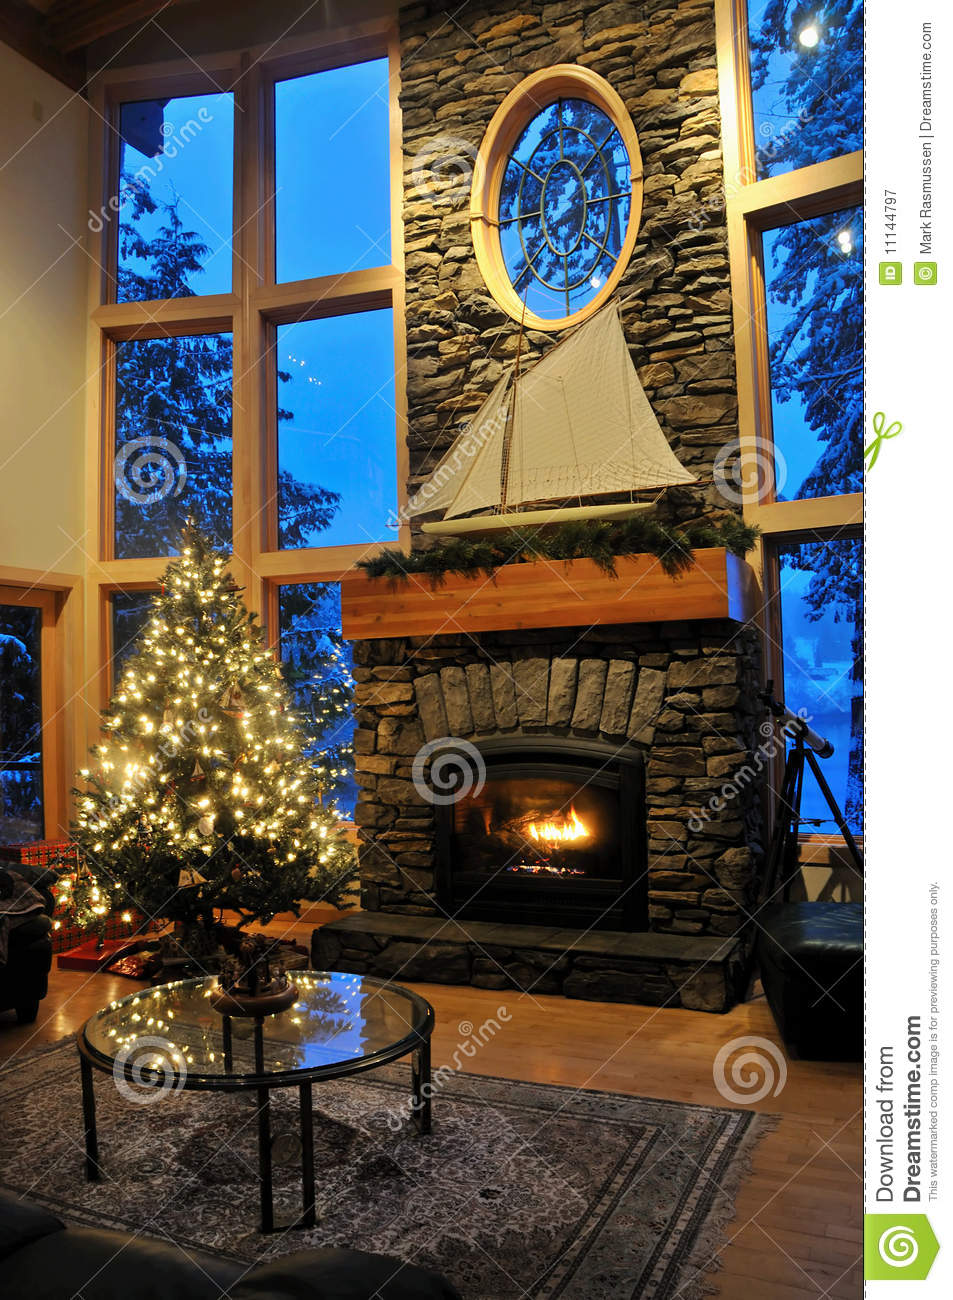 Rasmussen Fireplace Best Of Christmas Livingroom Stock Image Image Of Cozy Fireplace